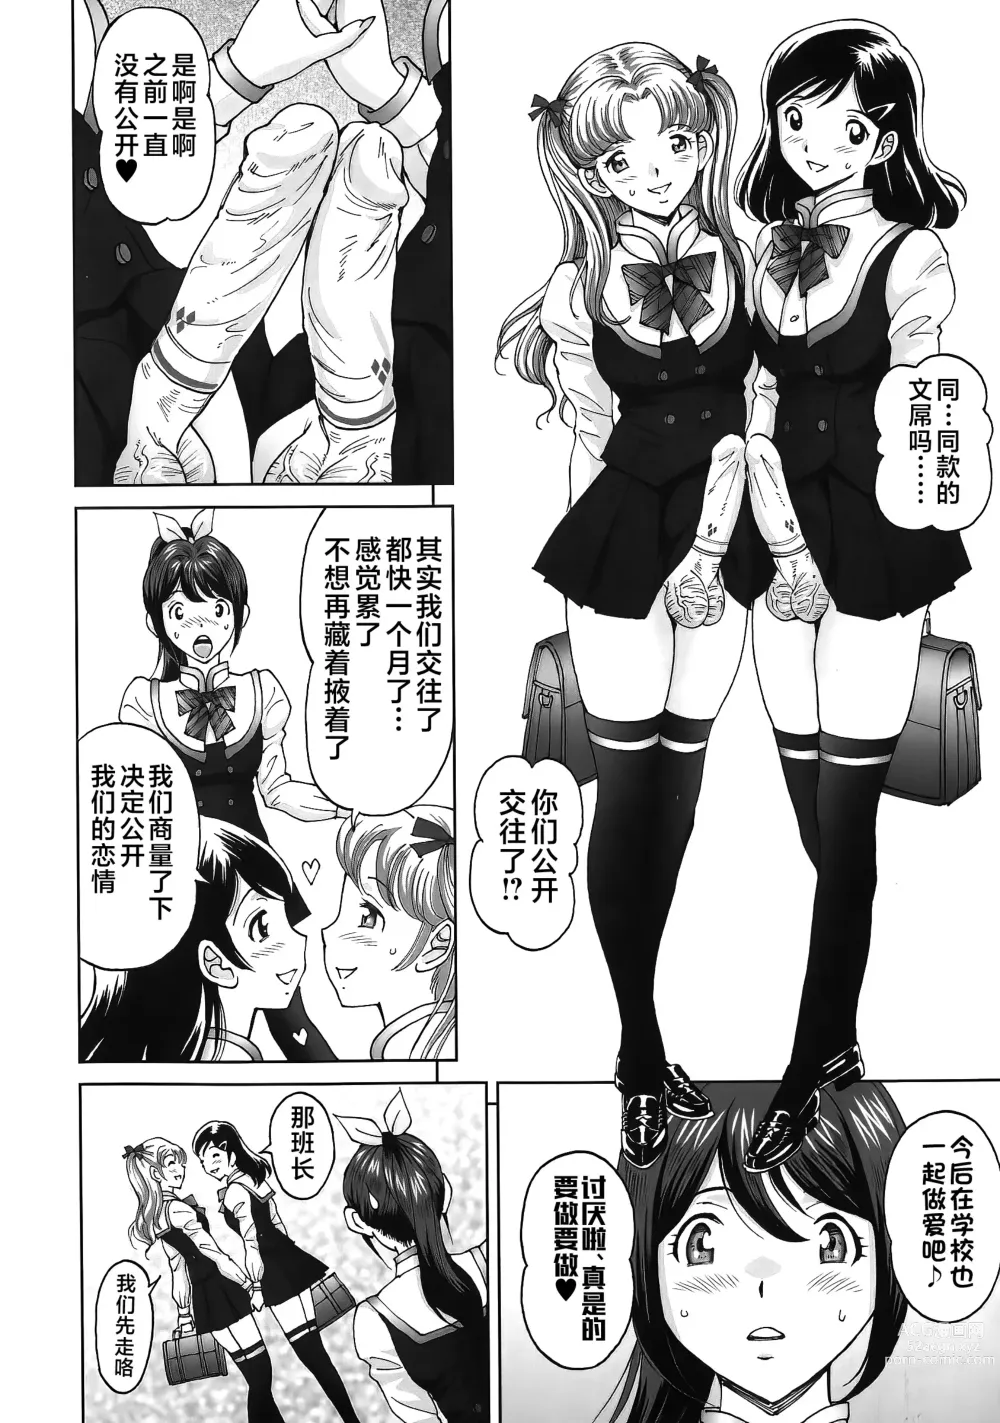 Page 2 of manga エンジョイNEWライフ 1-2